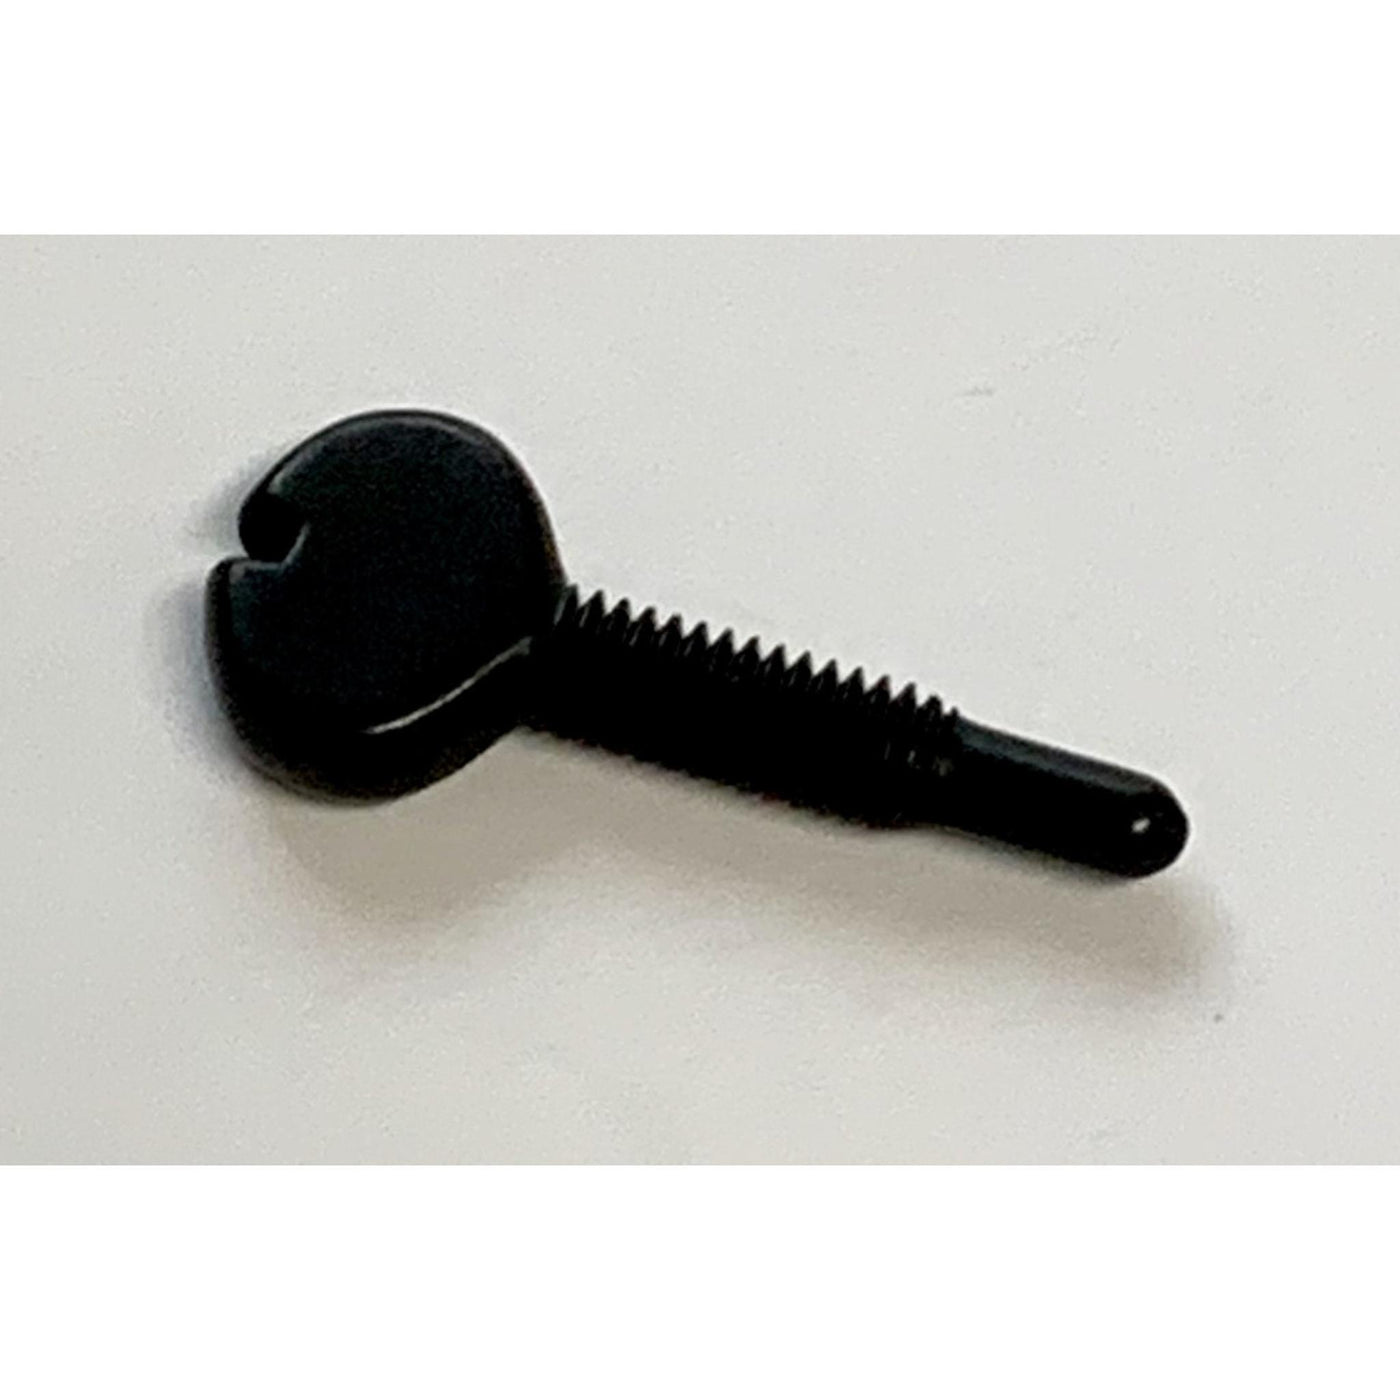 Nål clamp screw stor, (sort) TL 920/JD/MC7700/Elna740 mfl